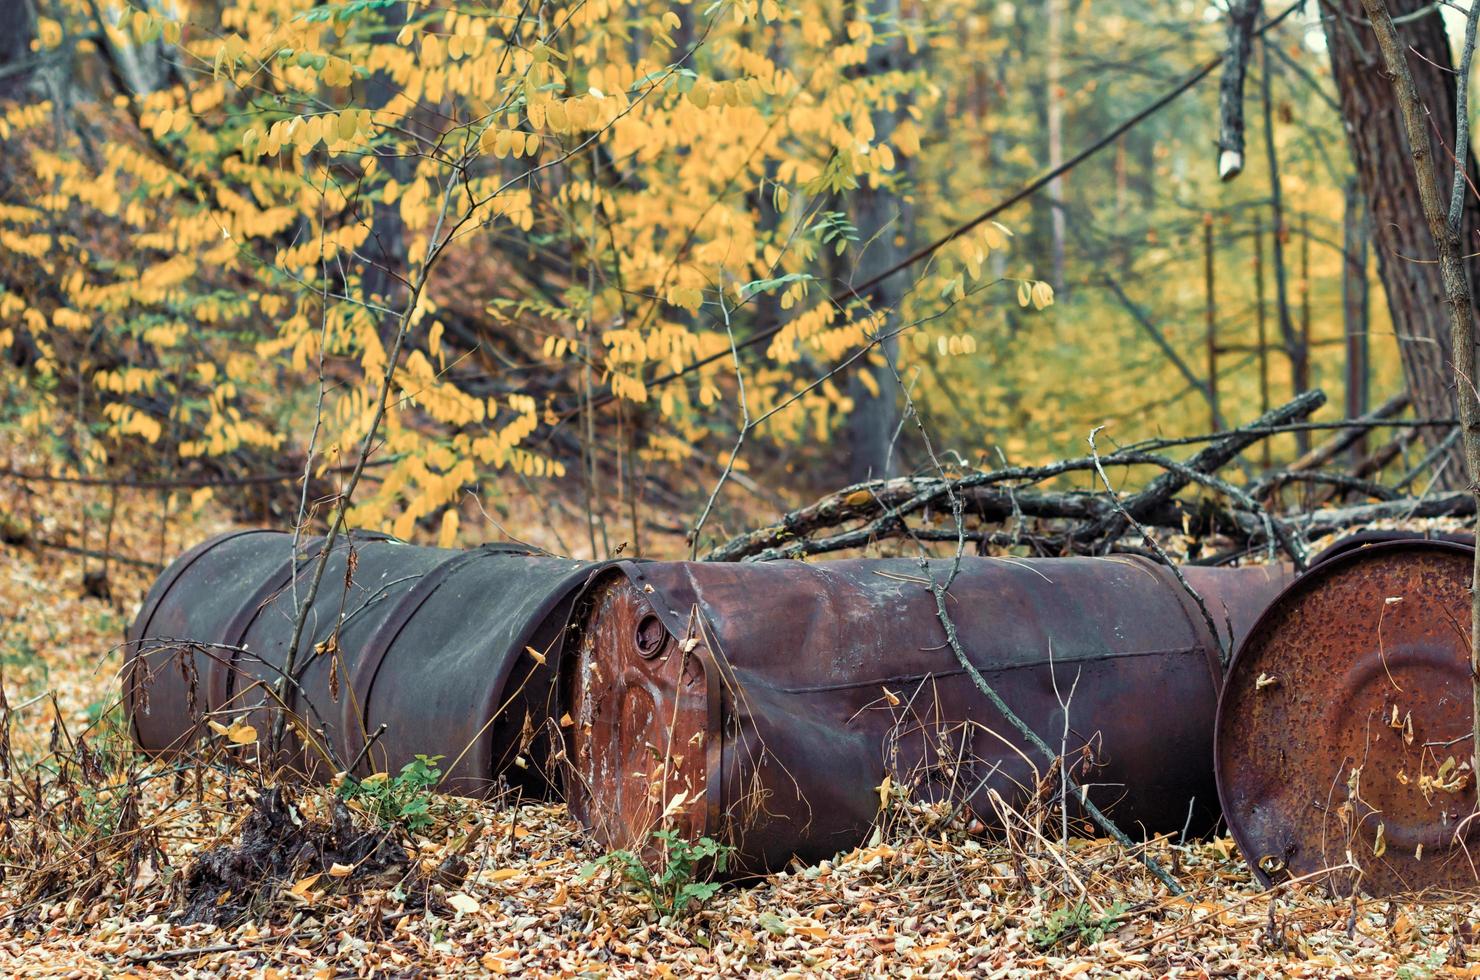 Pripyat, Ukraine, 2021 - Chemical barrels in Chernobyl photo